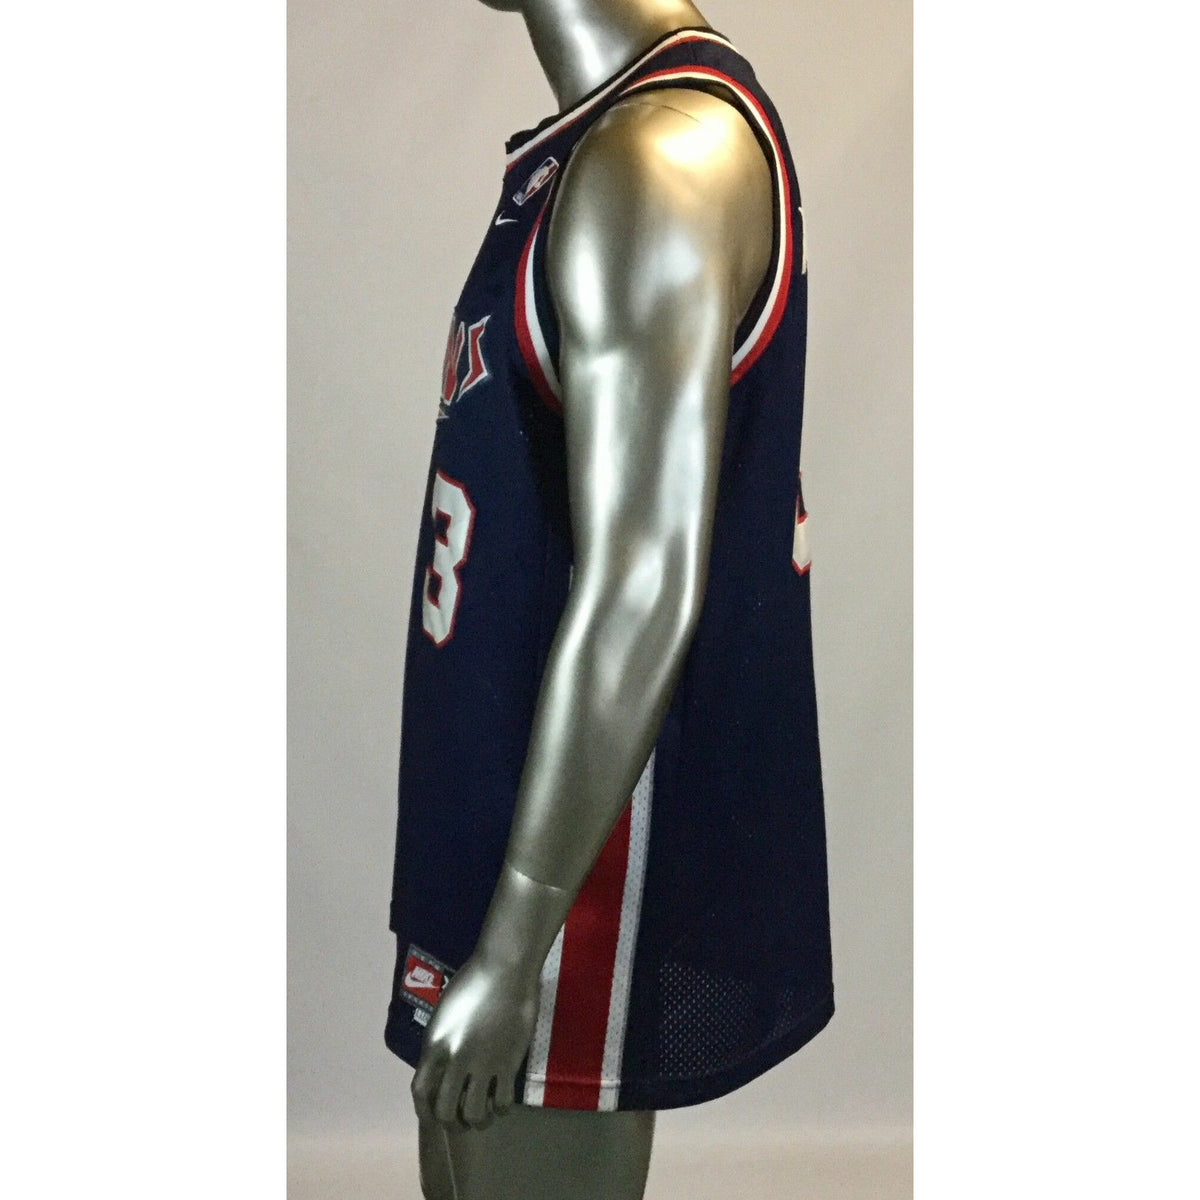 Vintage Detroit Pistons Ben Wallace Nike NBA Jersey, Size XXL